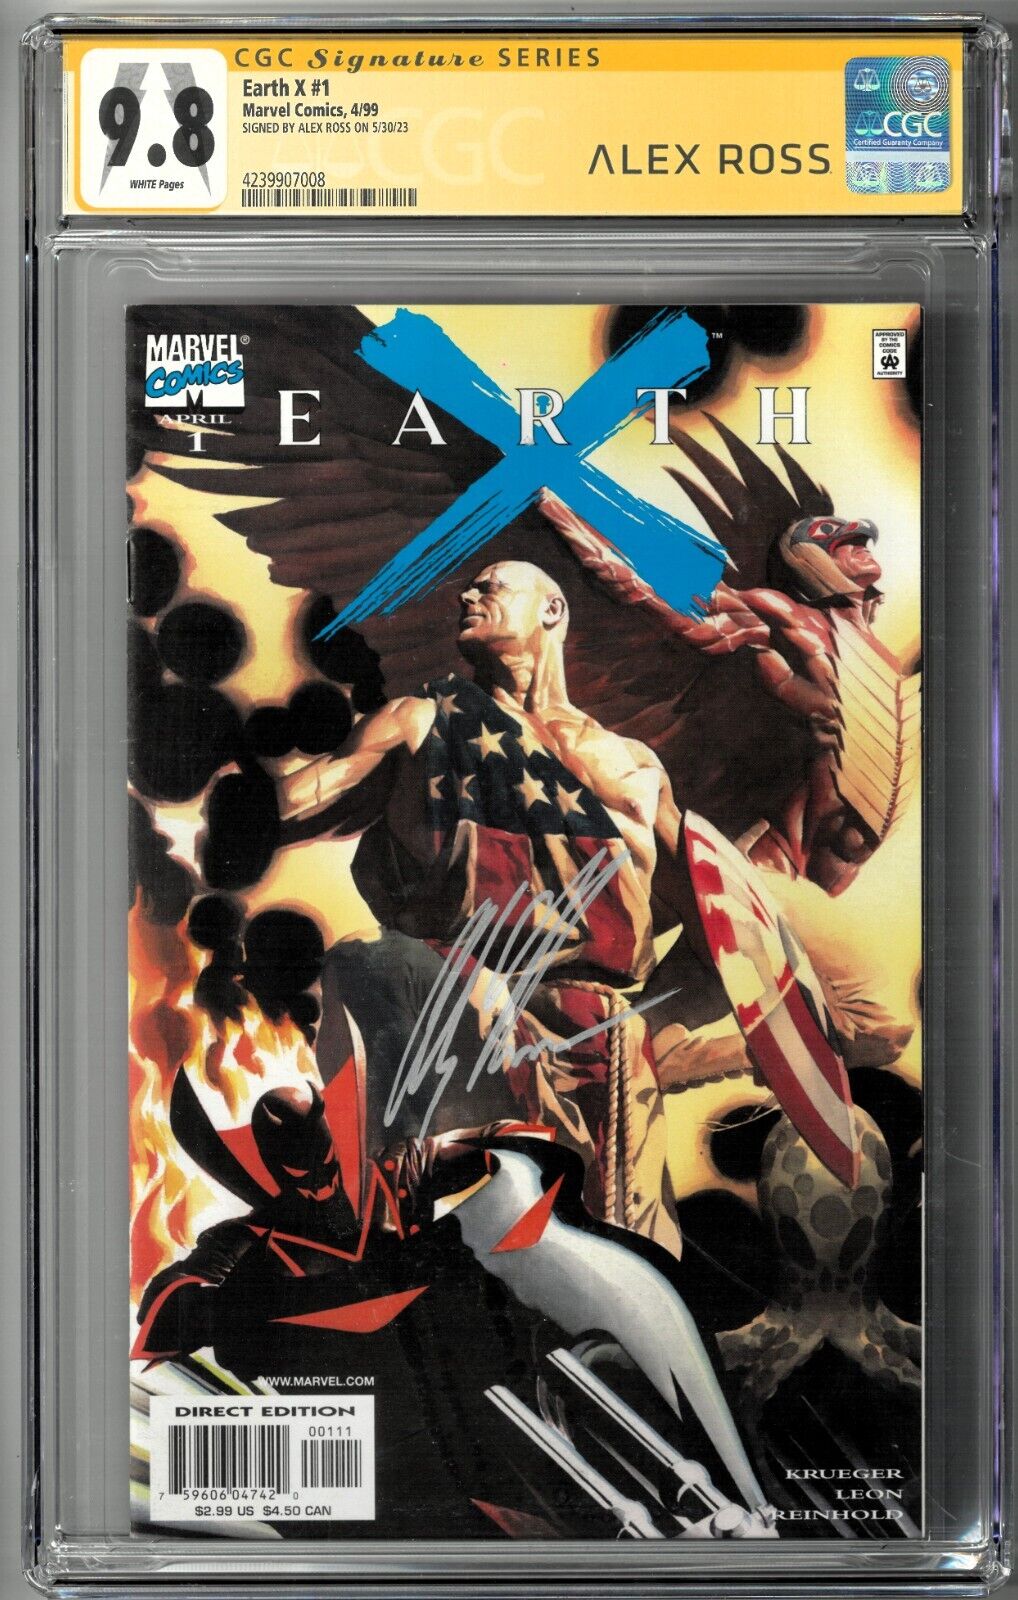 Earth X #1 CGC SS 9.8 (Apr 1999, Marvel) Signed Alex Ross, 1st May Parker Venom